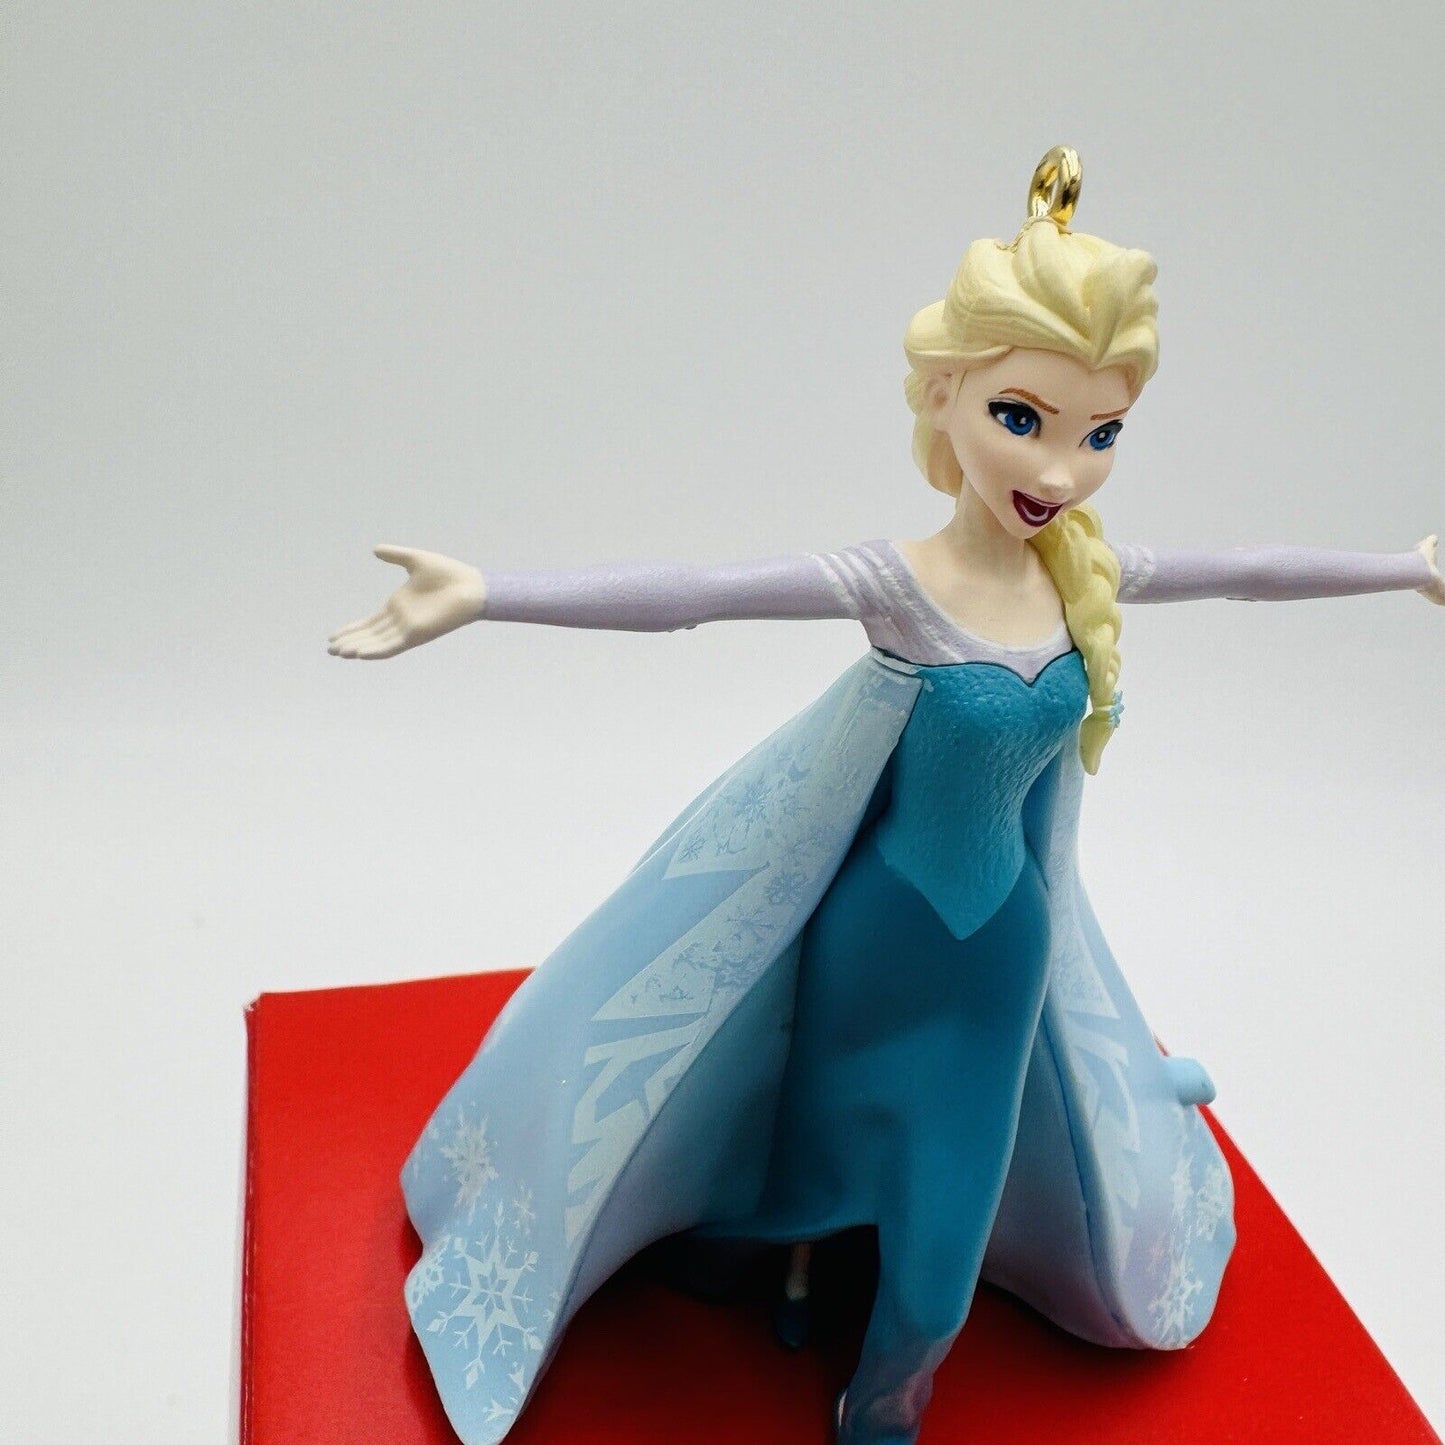 Hallmark Keepsake Ornament Disney Frozen Let It Go Queen Elsa w/ Sound 2015 Rare